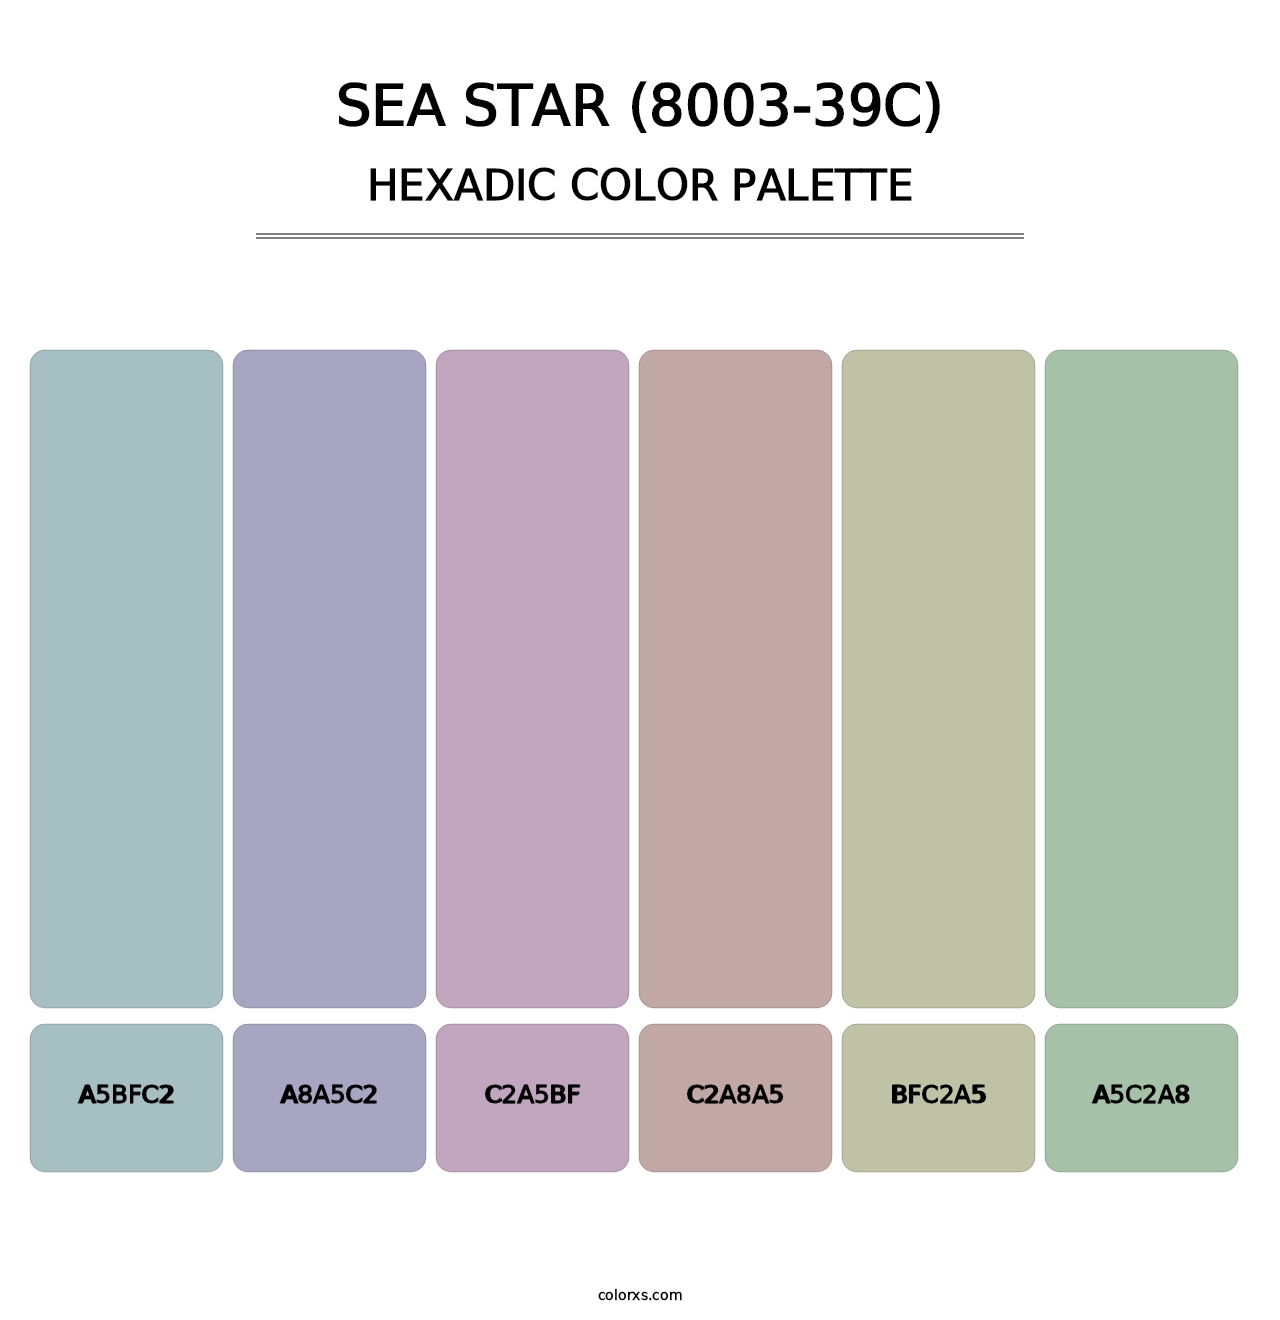 Sea Star (8003-39C) - Hexadic Color Palette